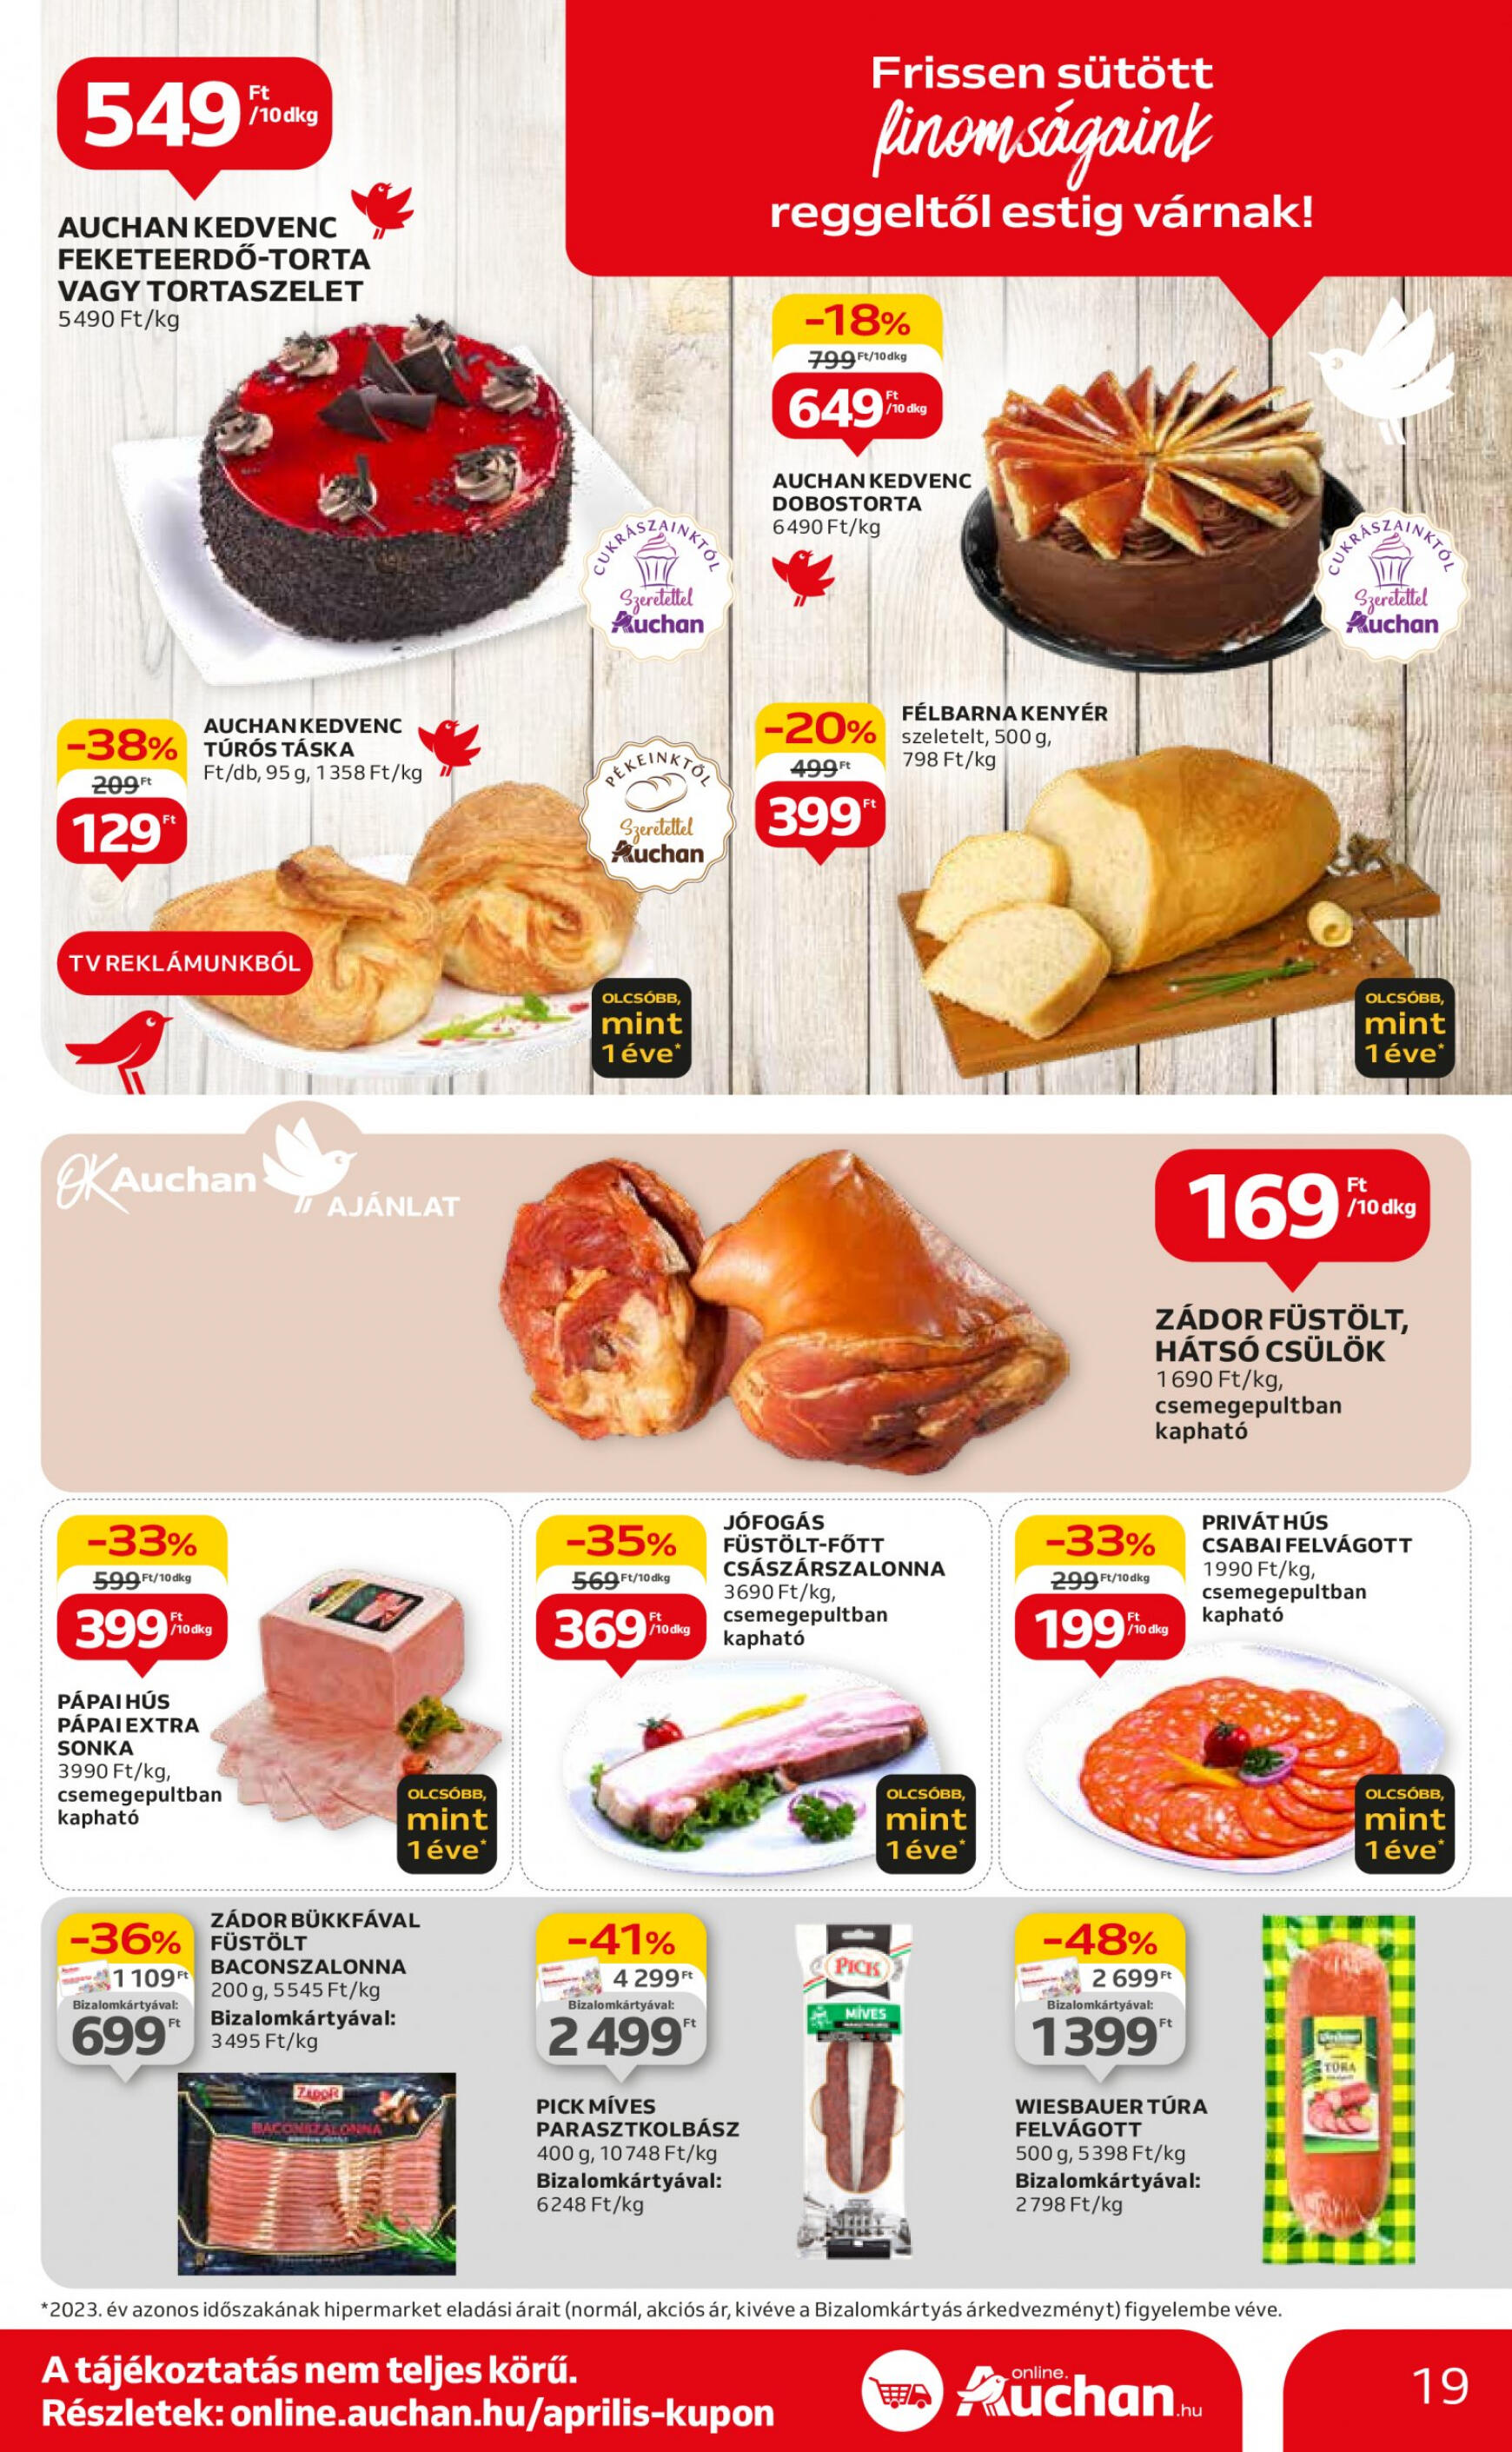 auchan - Aktuális újság Auchan 04.25. - 04.30. - page: 19